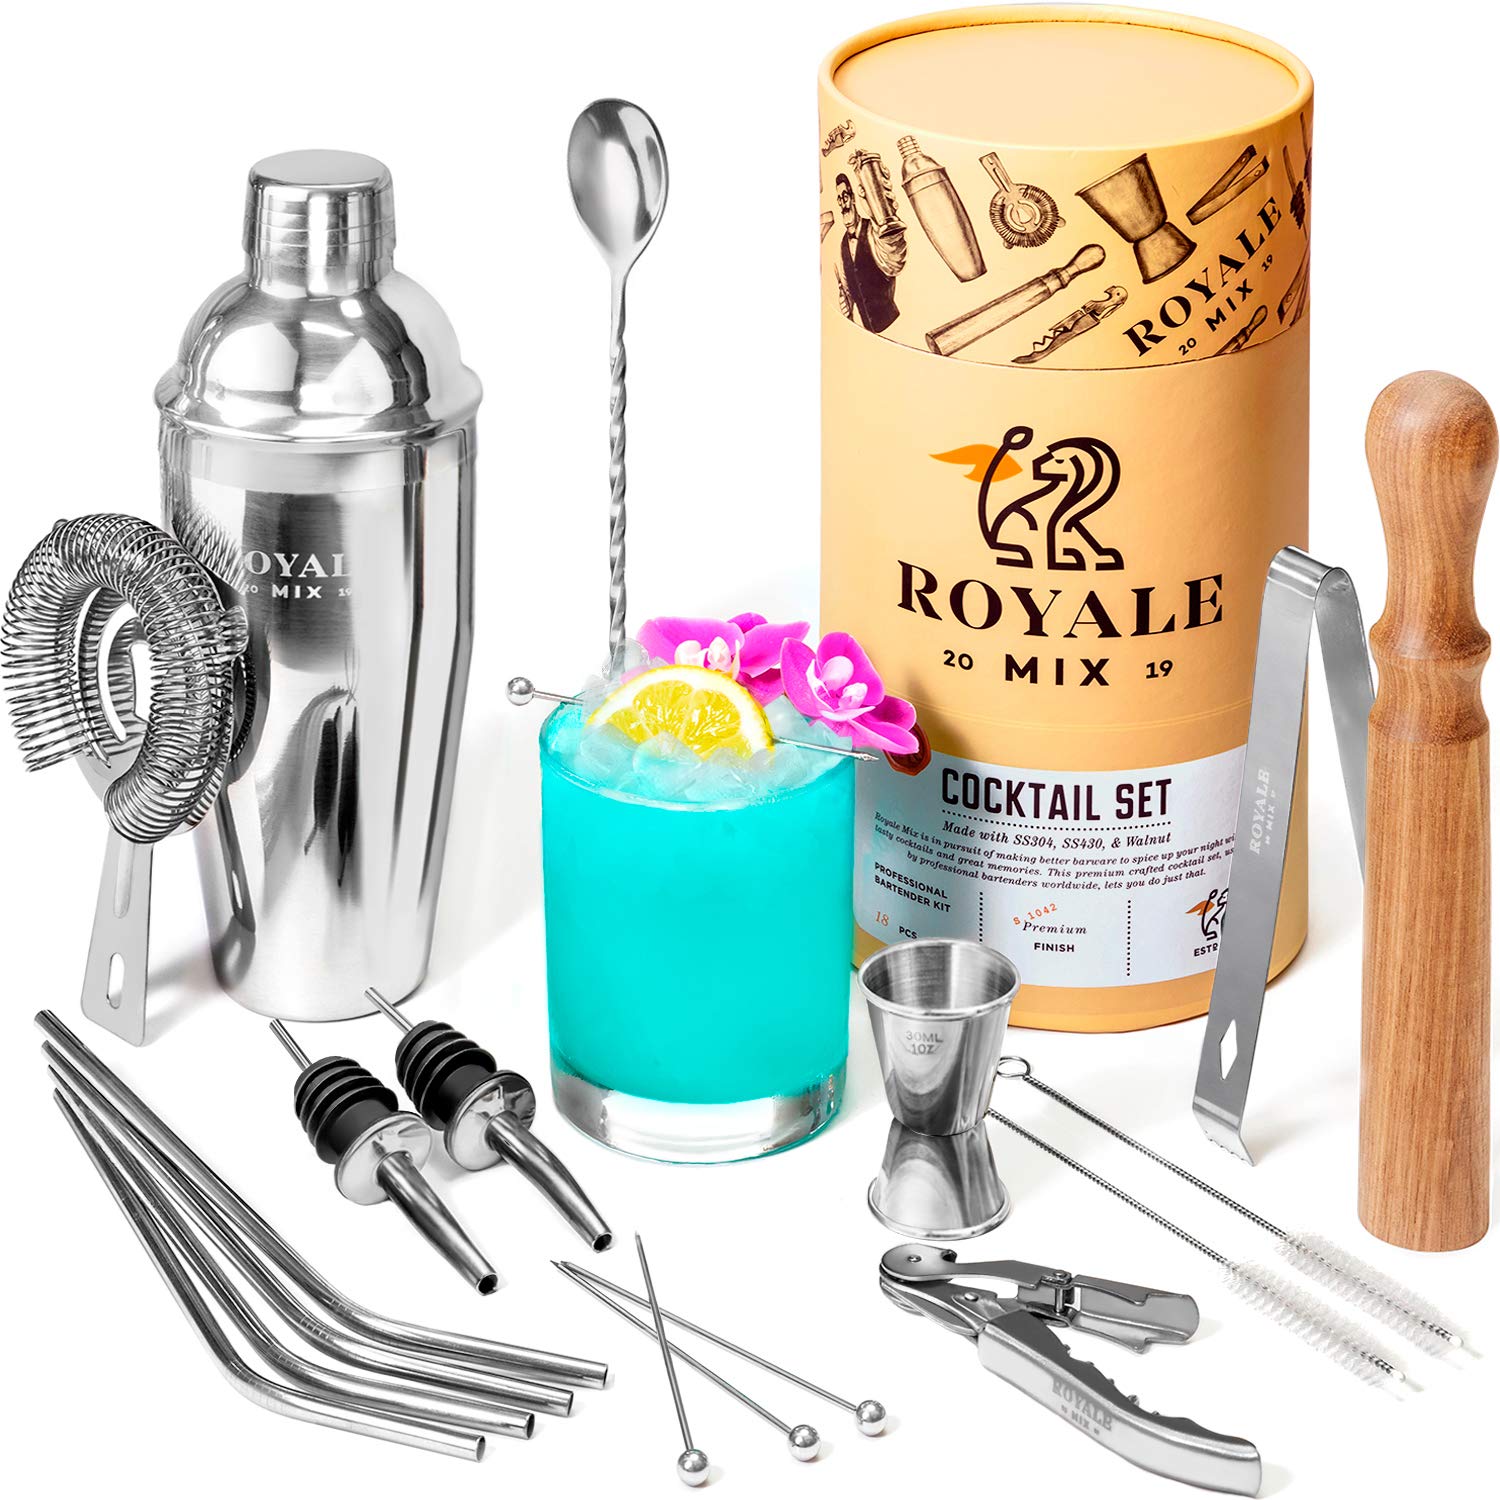 Cocktail Mixers & Cocktail Making Kits